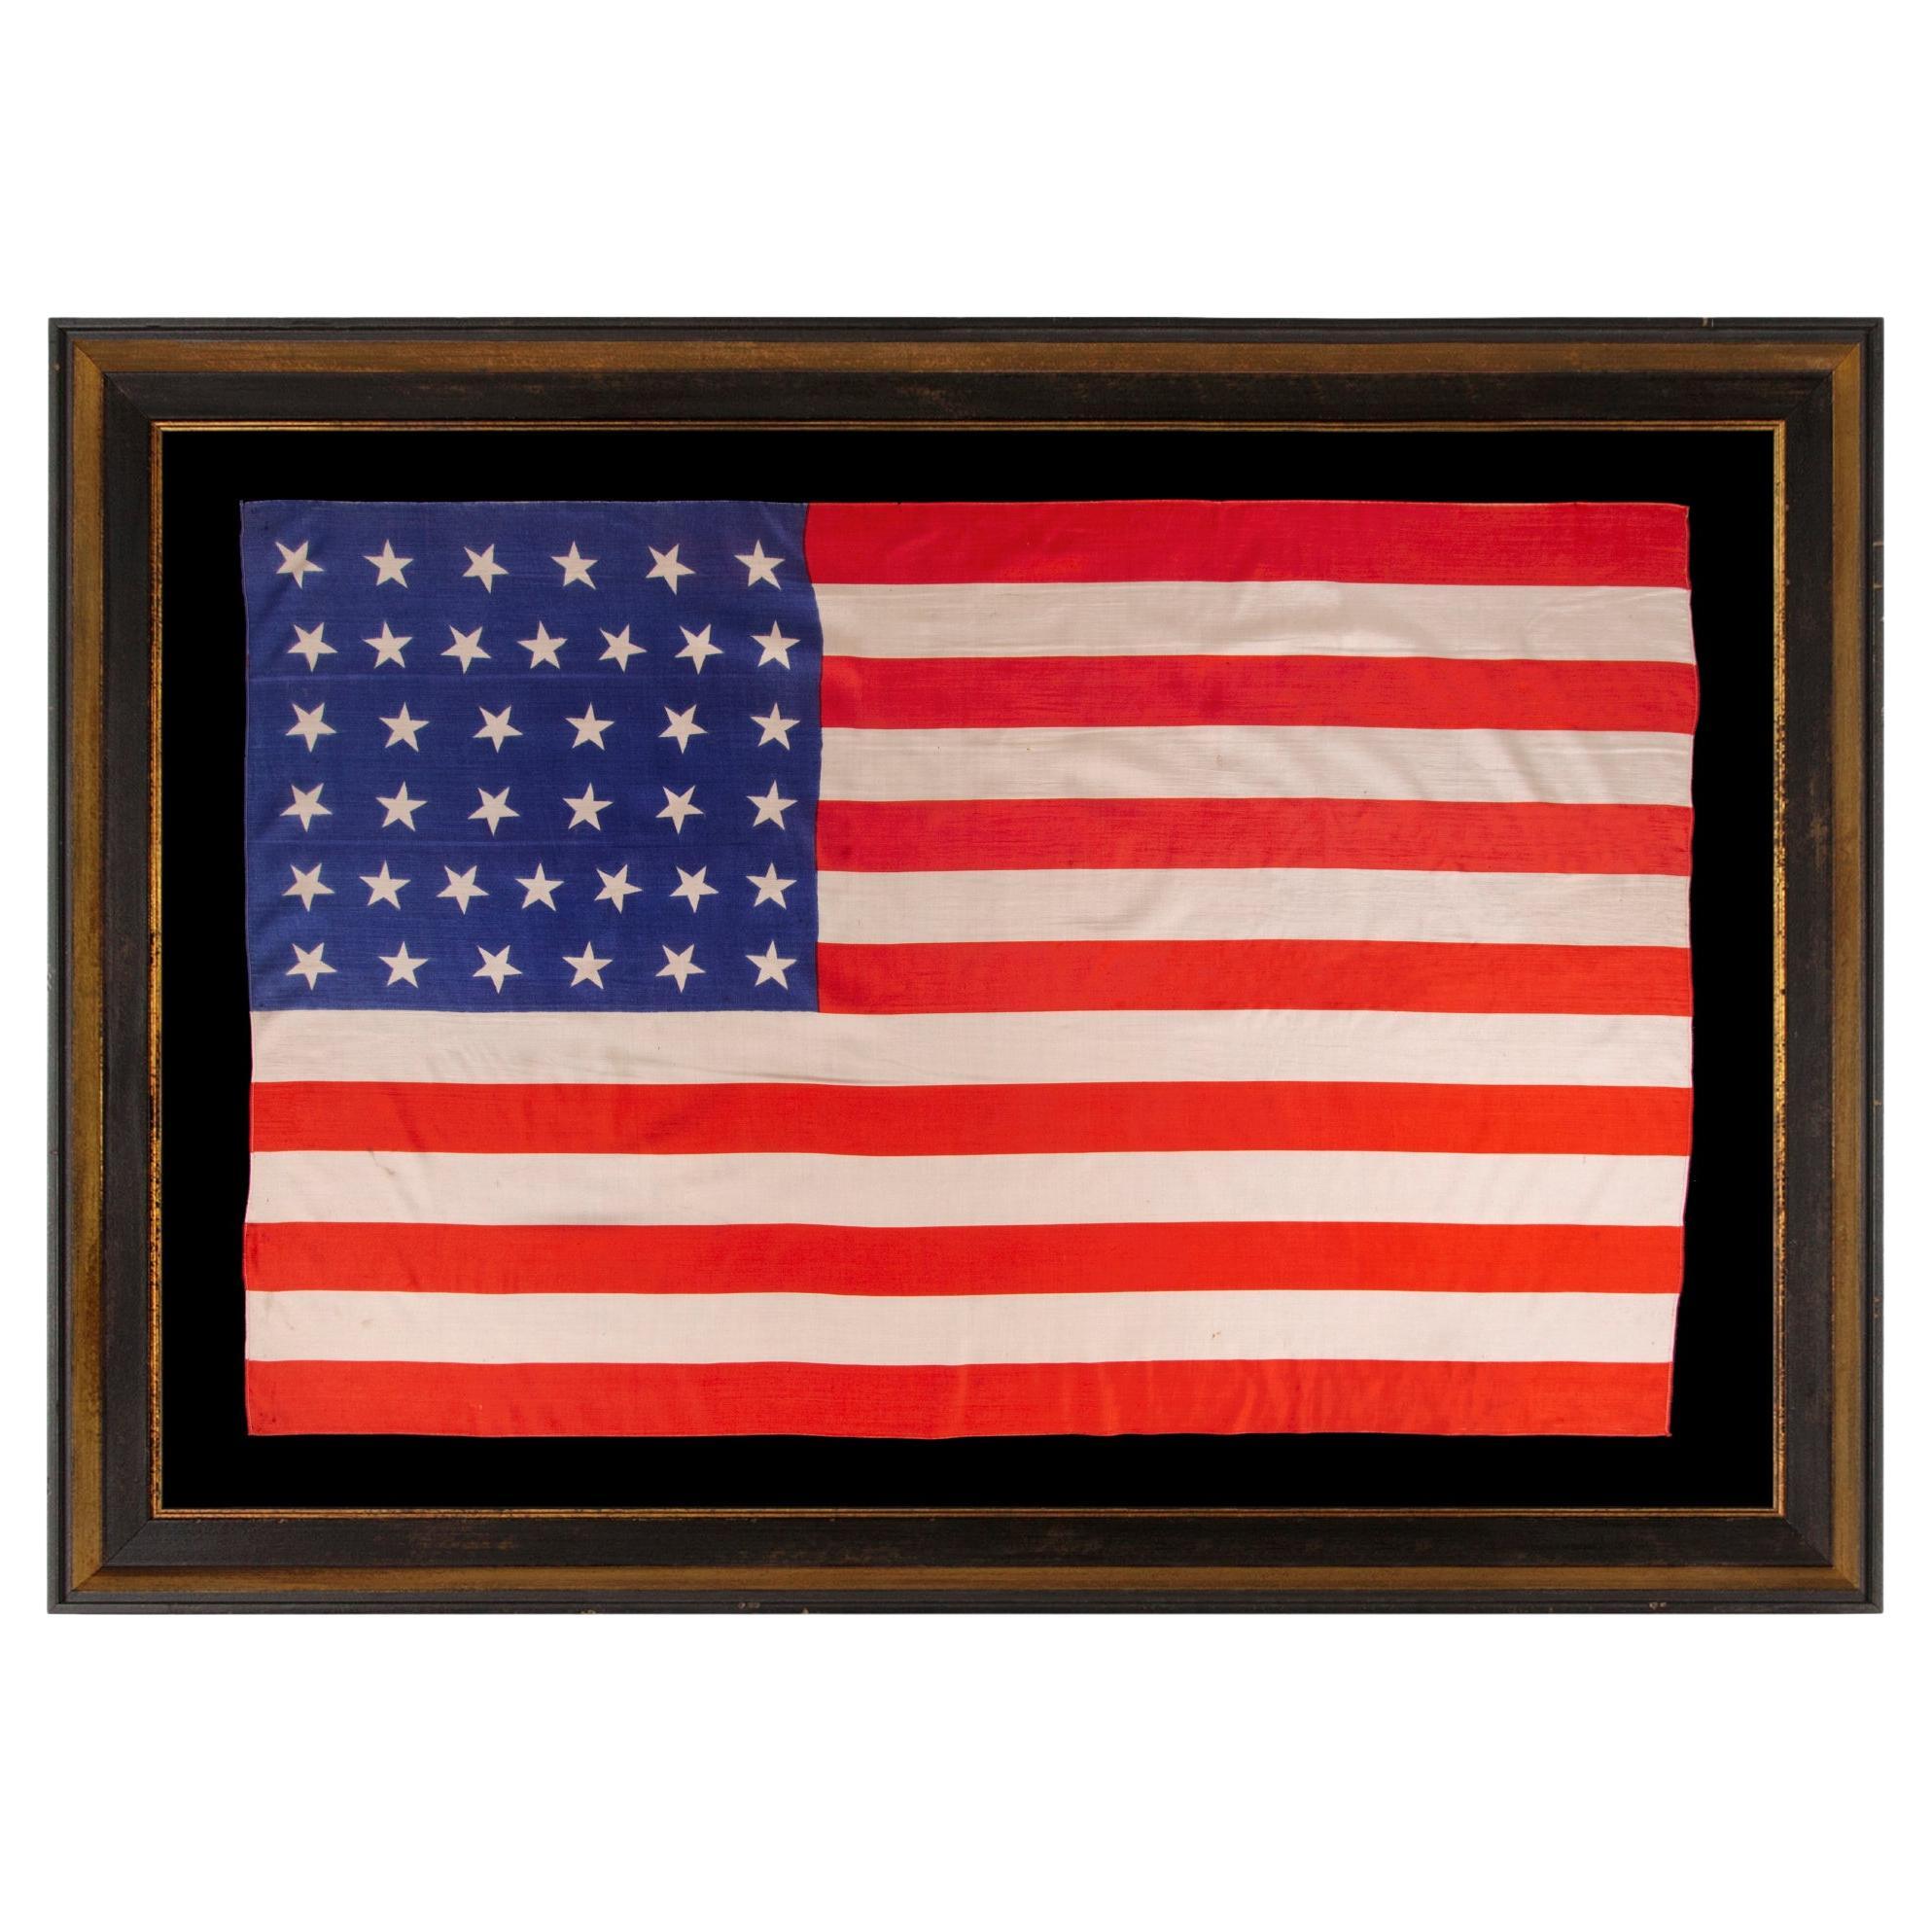 38 Star Antique American Flag, Colorado Statehood, ca 1876-1889